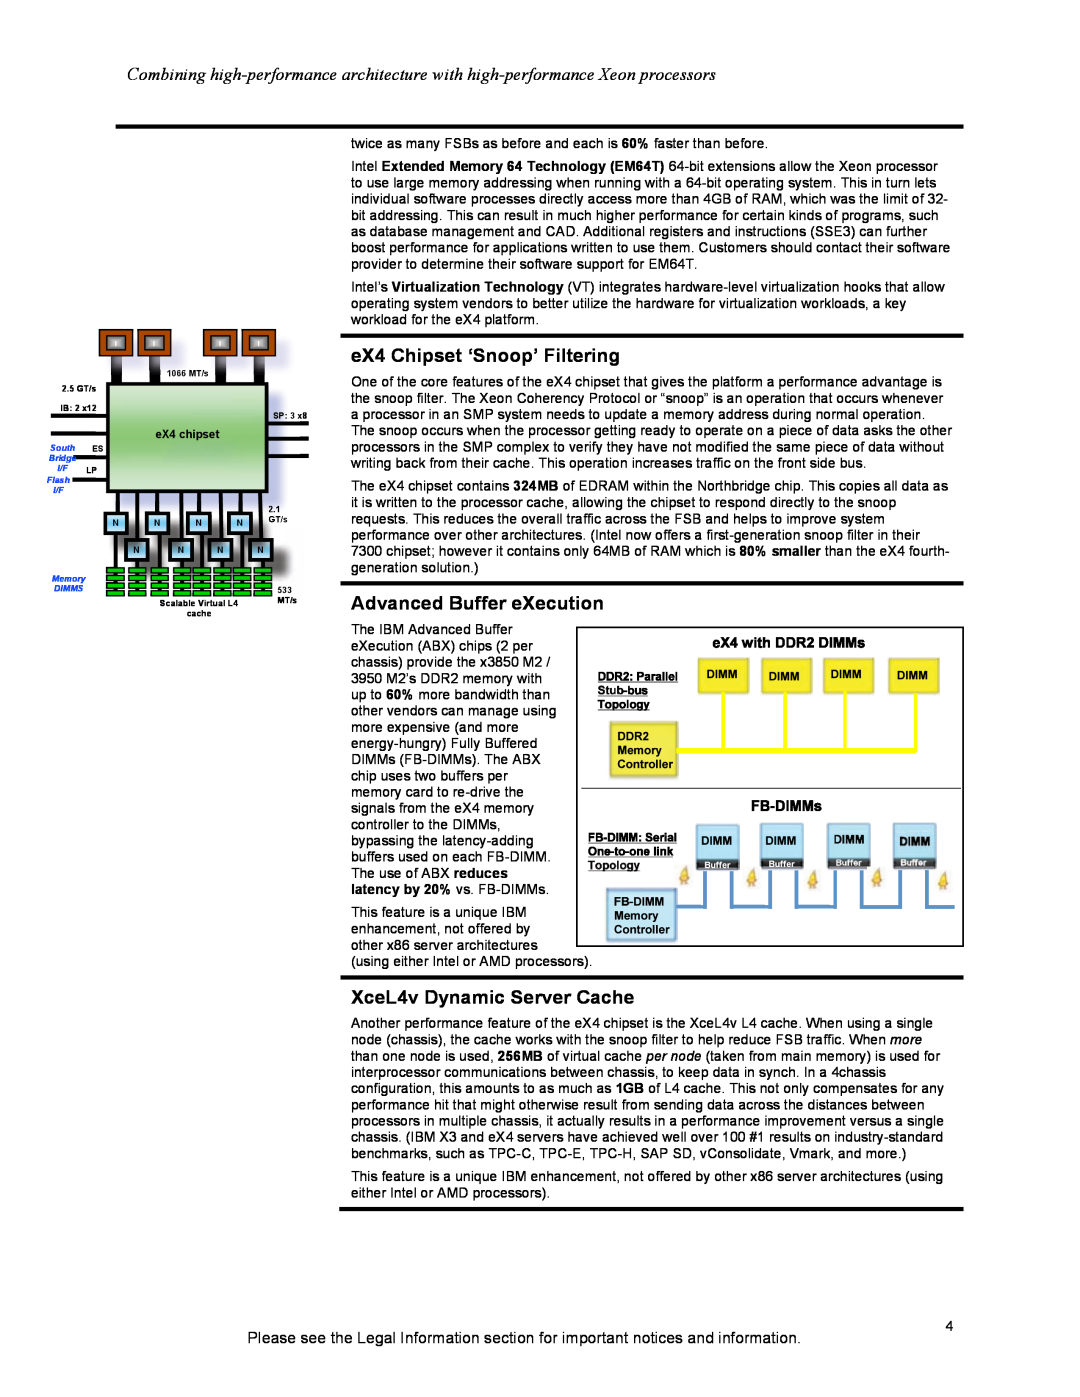 IBM X3850 M2, X3950 M2 manual eX4 Chipset ‘Snoop’ Filtering, Advanced Buffer eXecution, XceL4v Dynamic Server Cache 